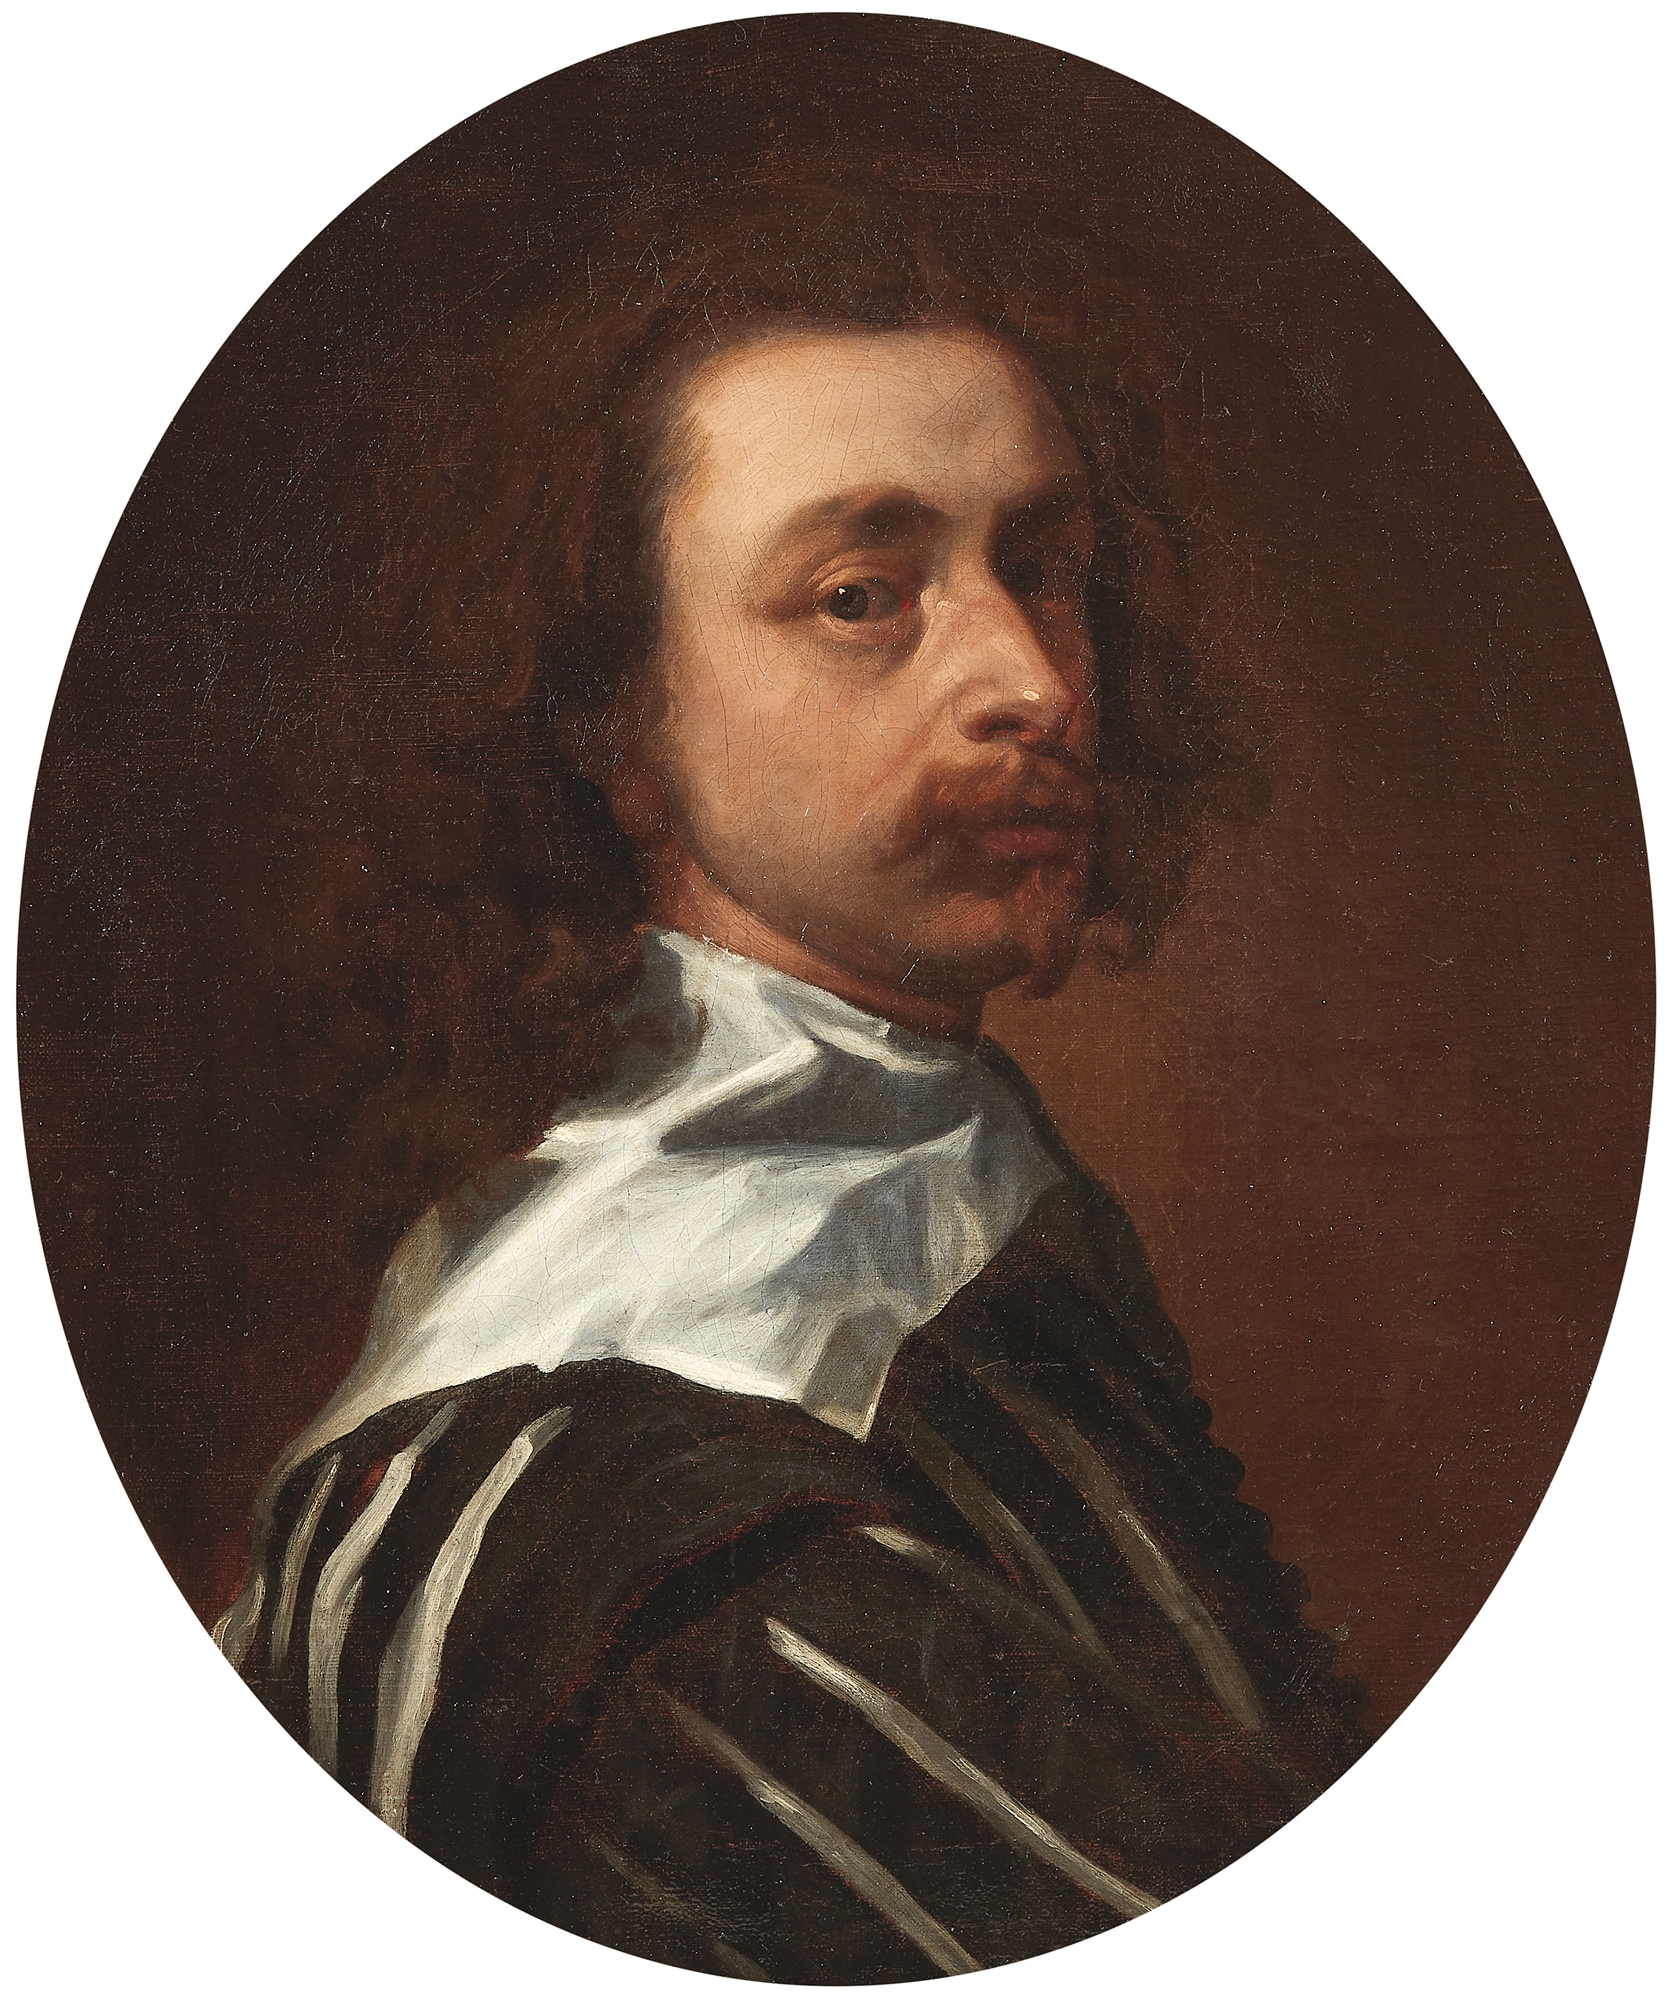 Flemish School 17th century, Portrait of a Man